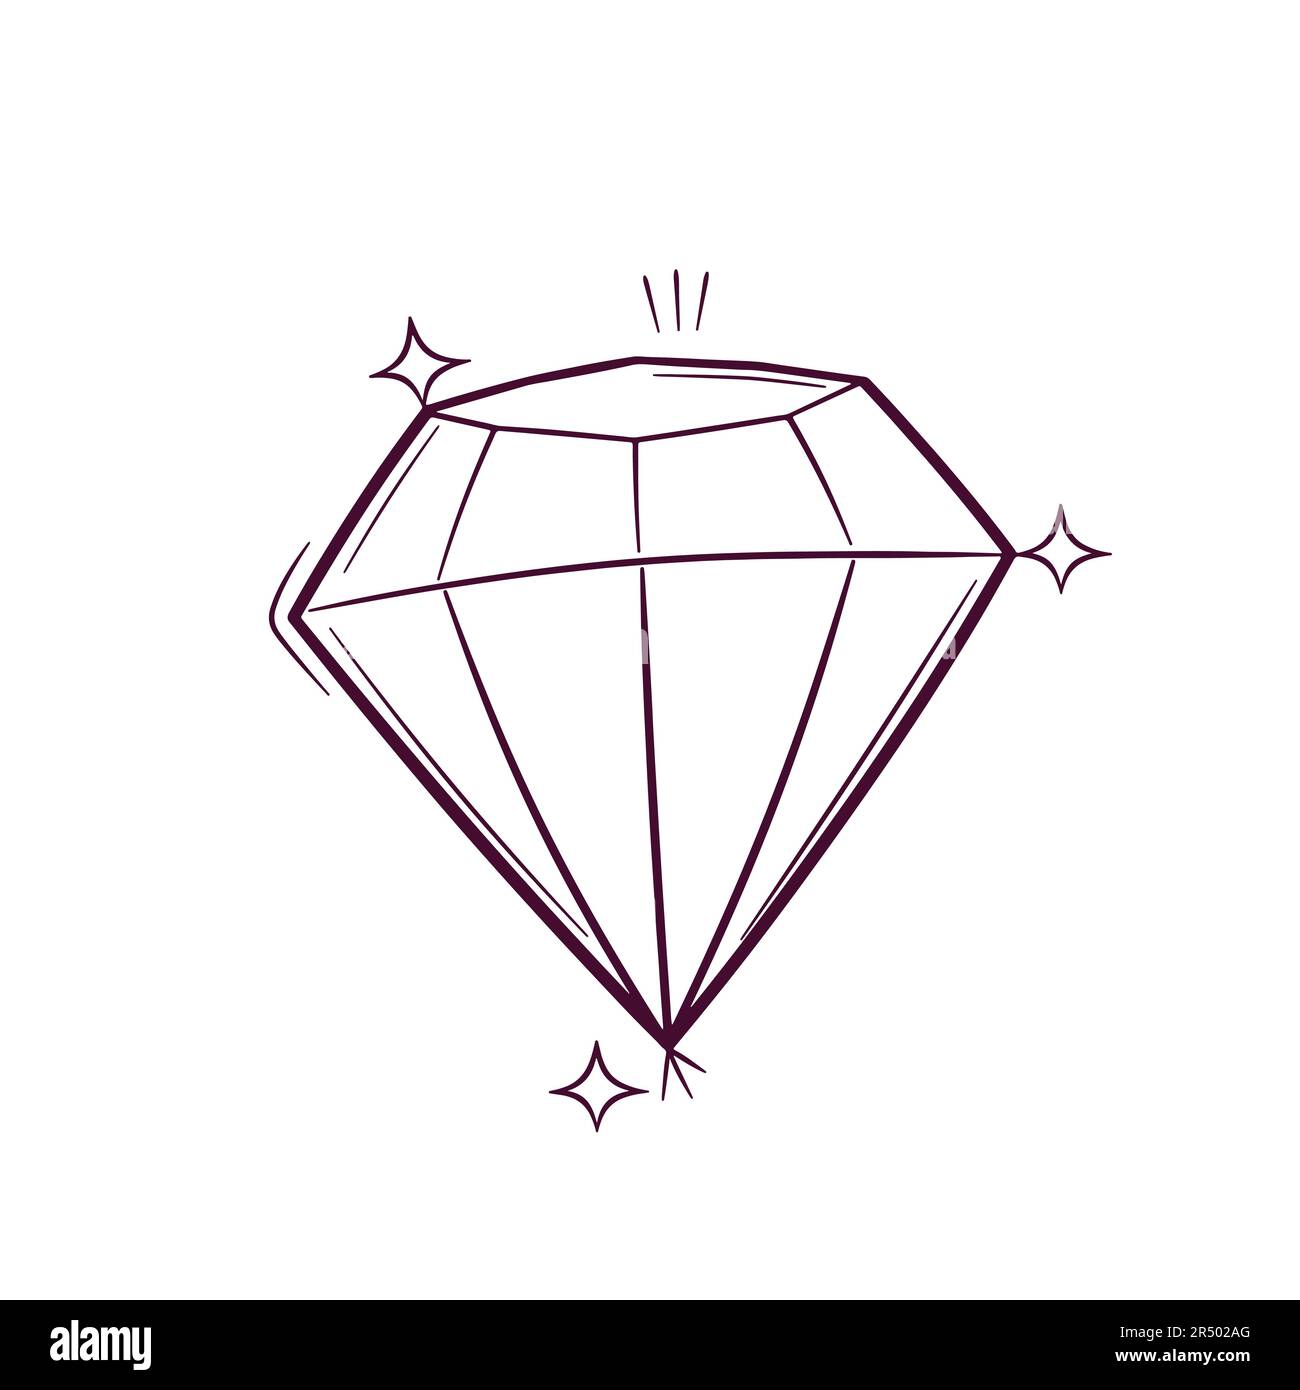 Handgezeichneter Diamant. Doodle Vector Sketch-Illustration  Stock-Vektorgrafik - Alamy